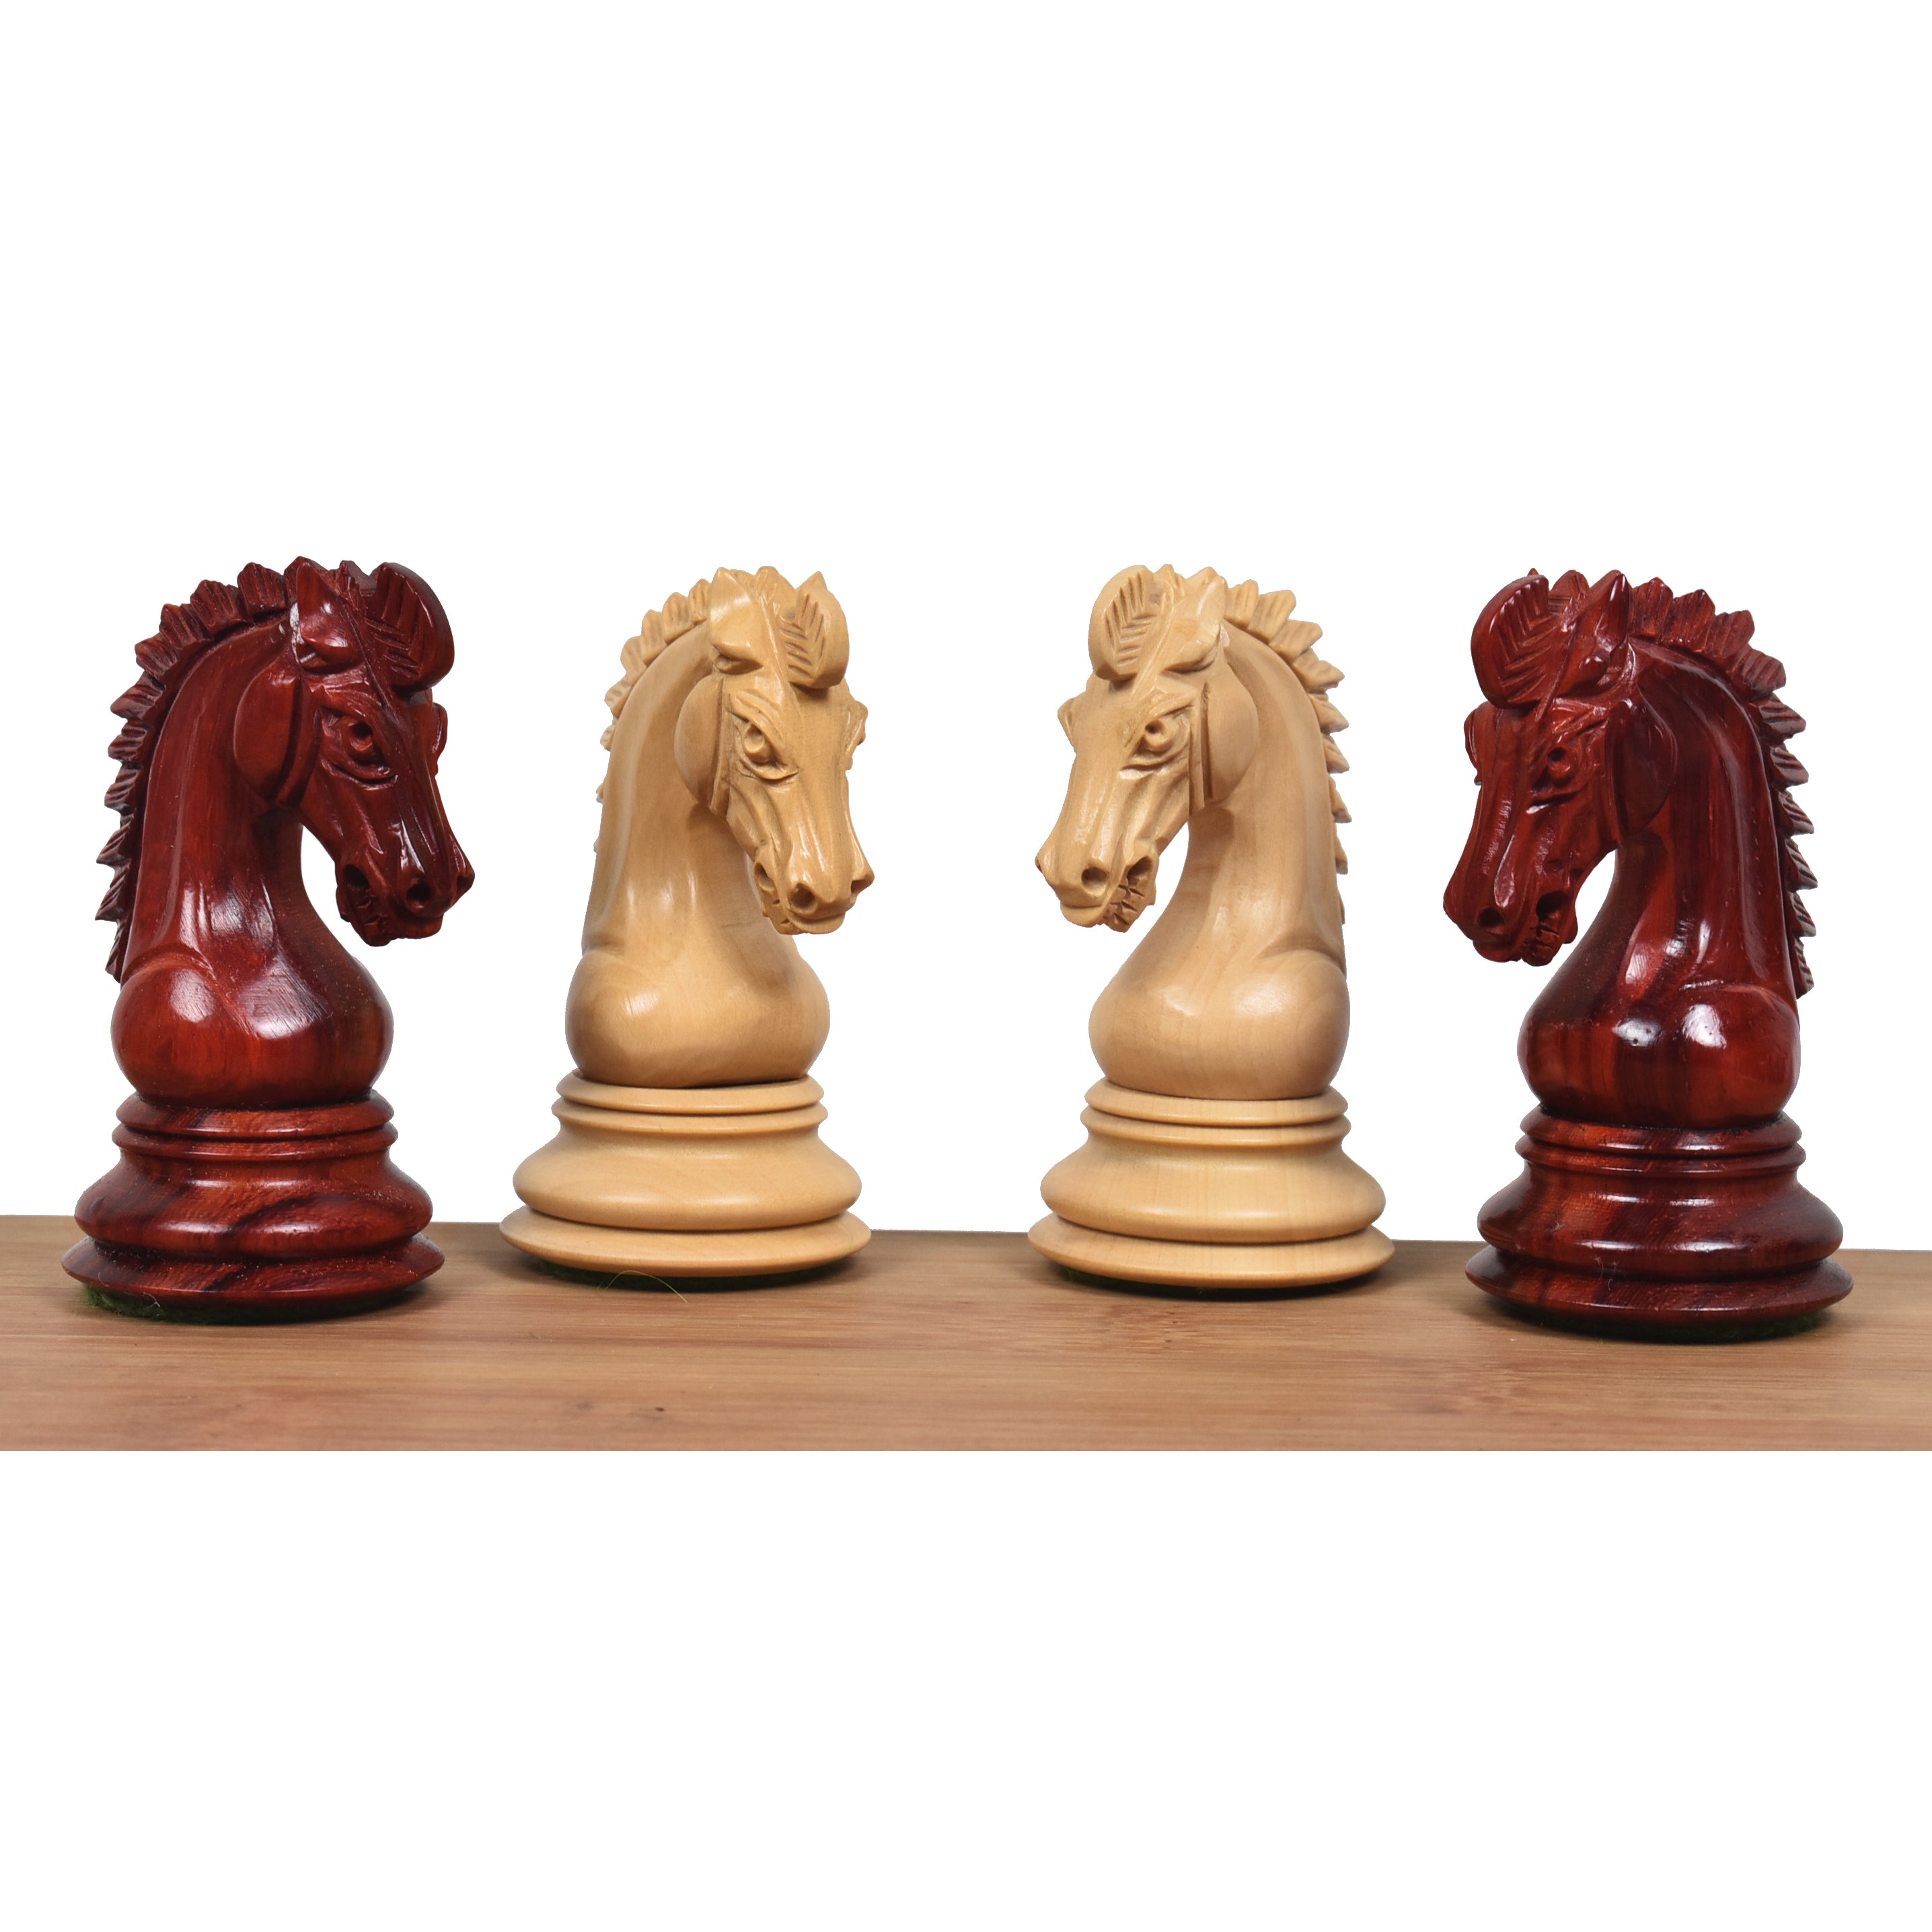 Chess engine: Slow Chess 1.7